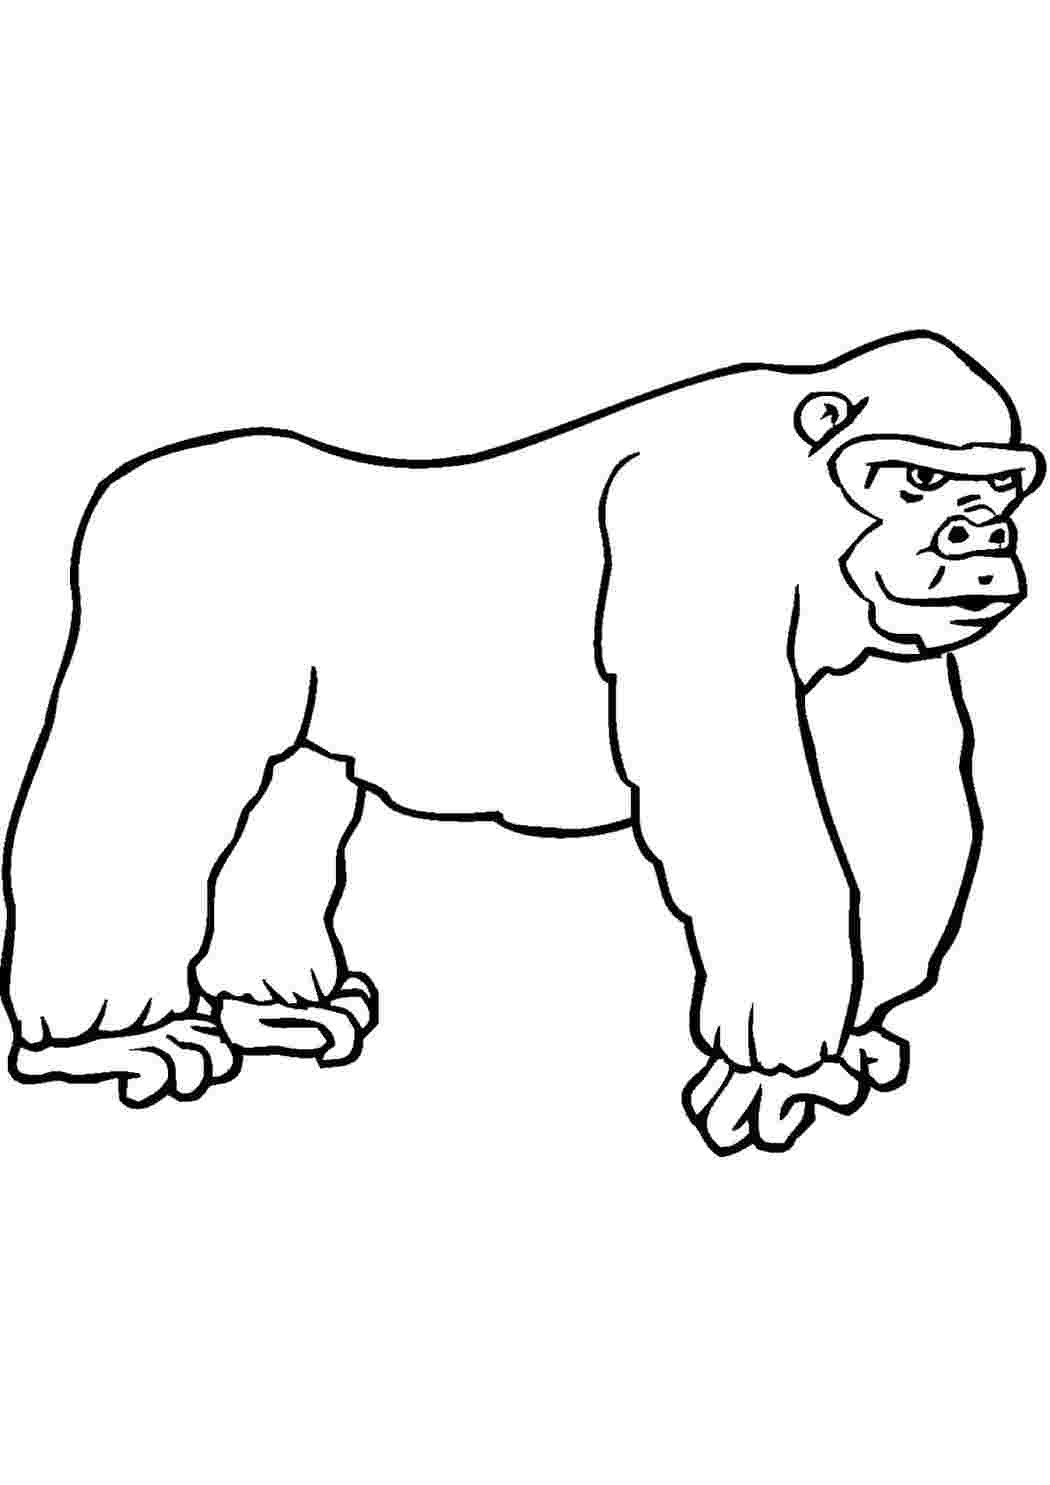 Раскраски обезьяны - для печати